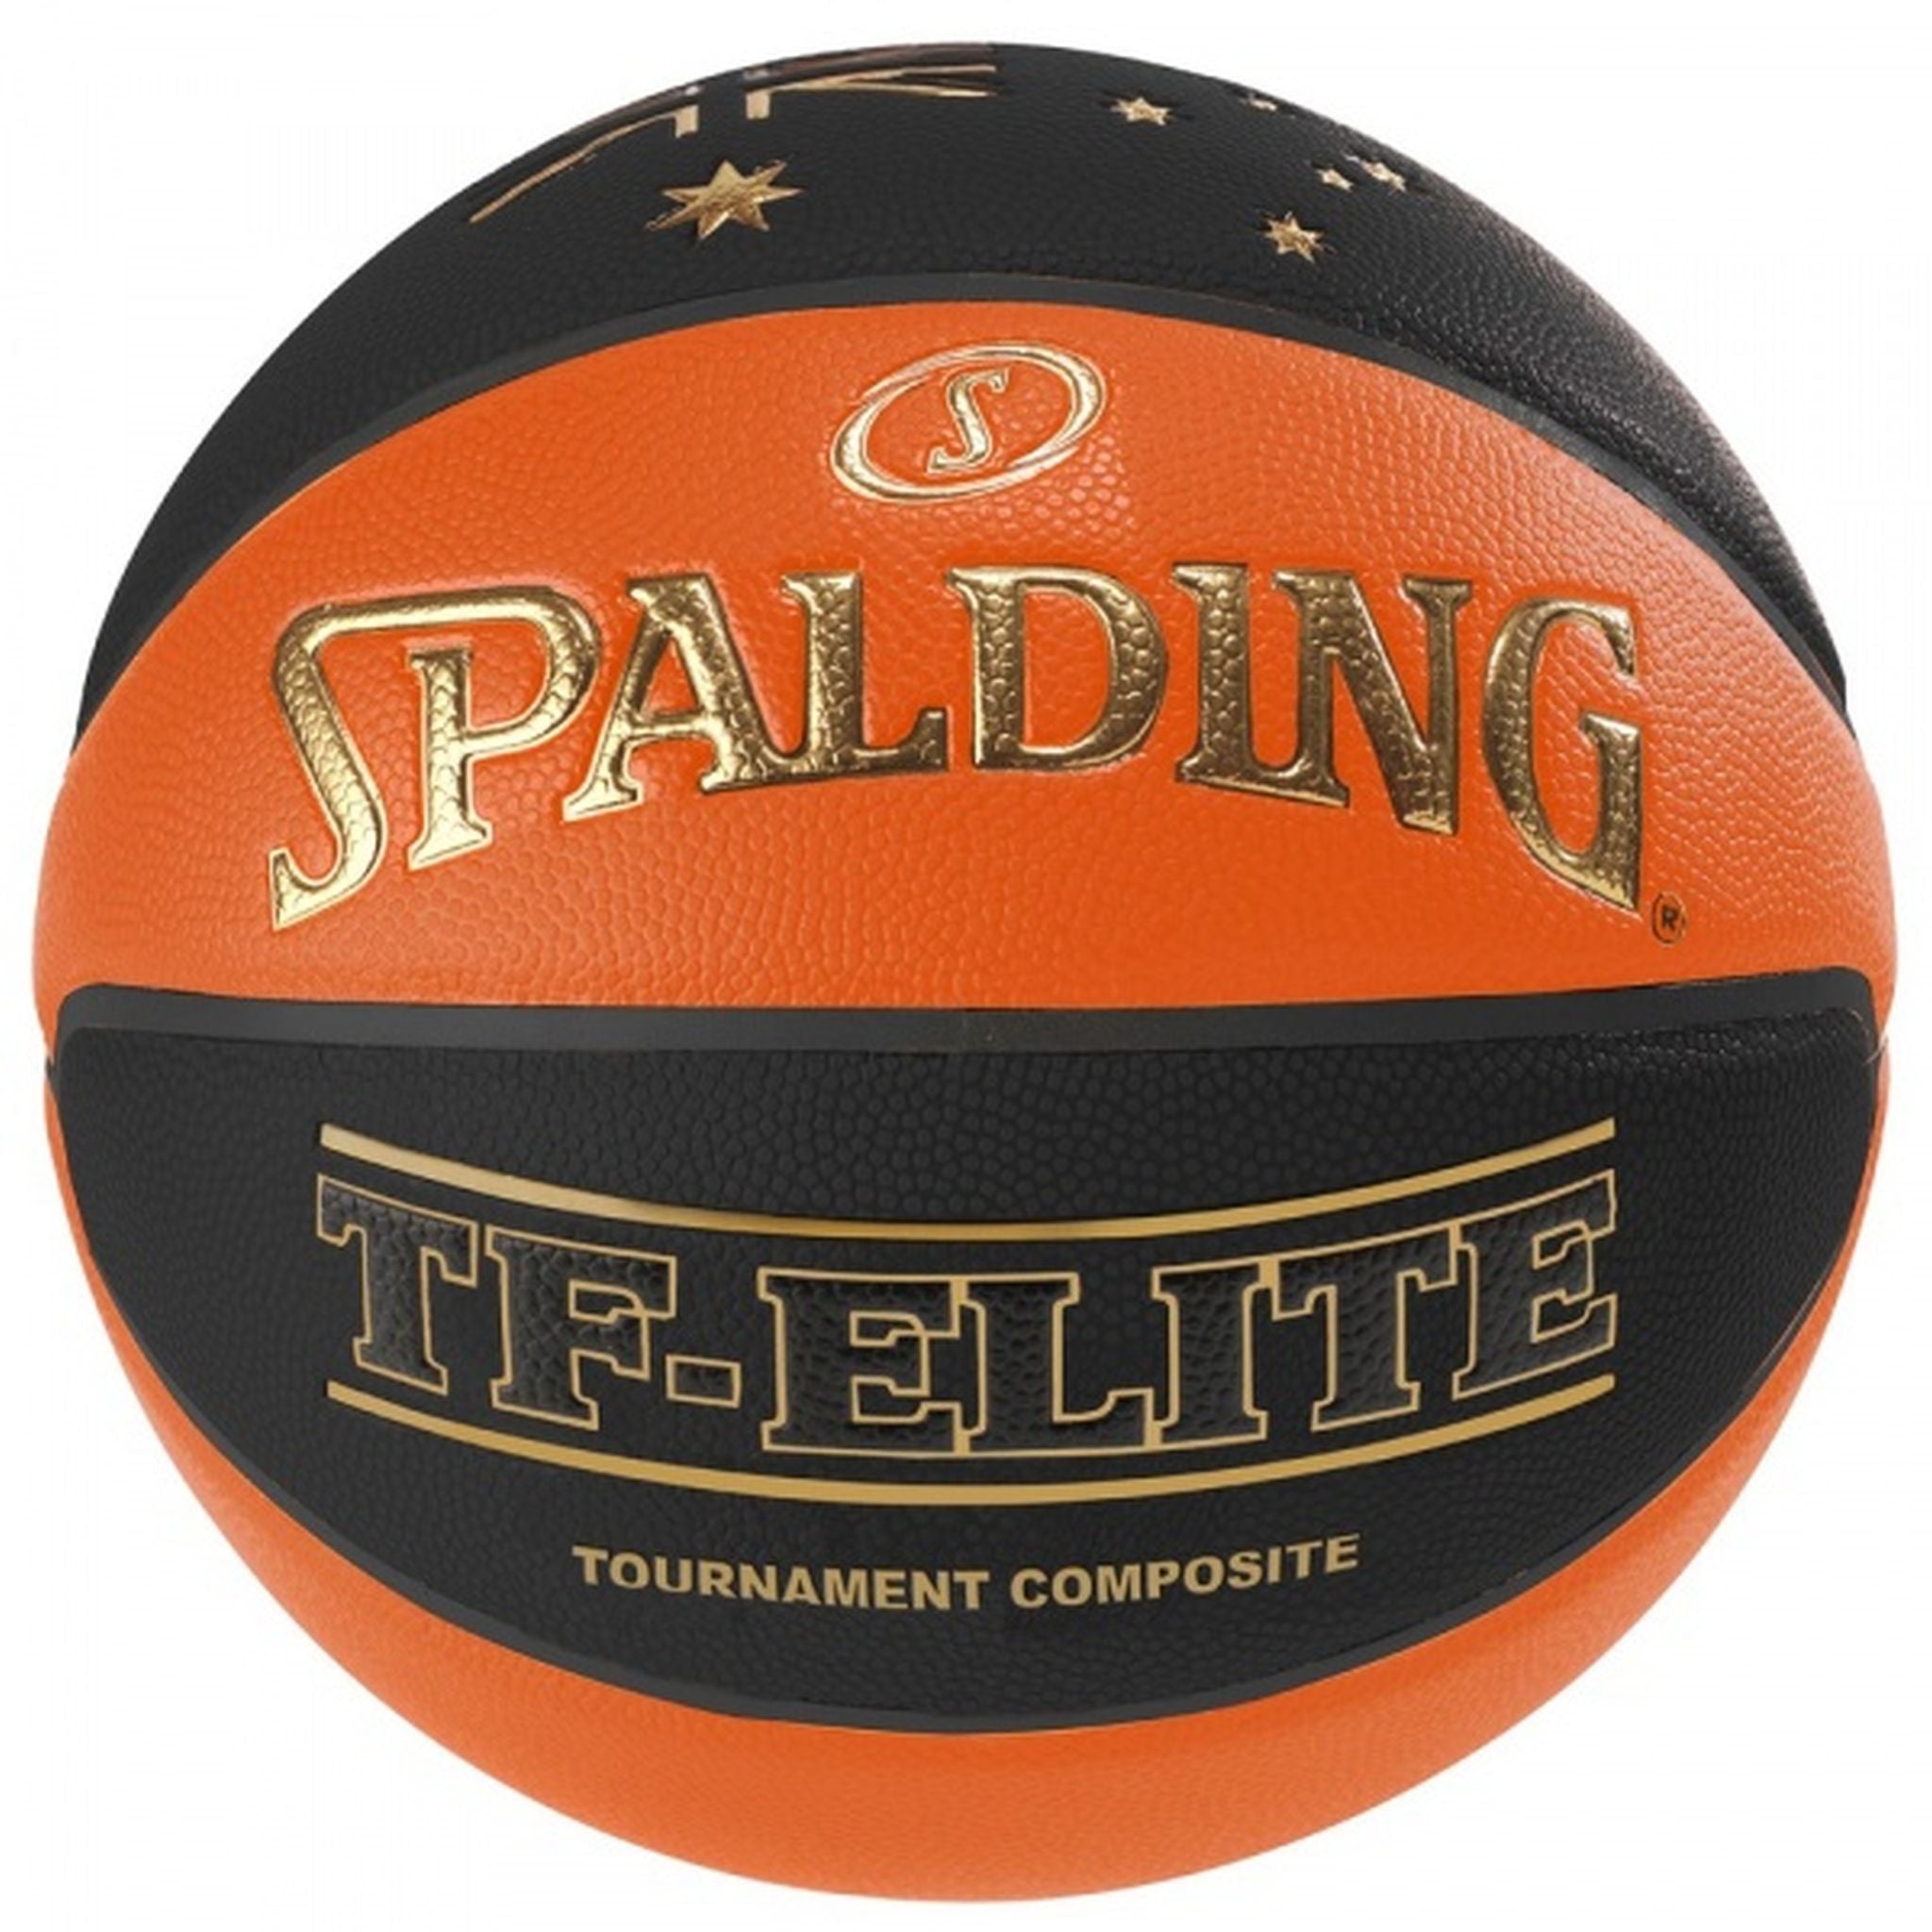 Spalding TF Elite Indoor Basketball